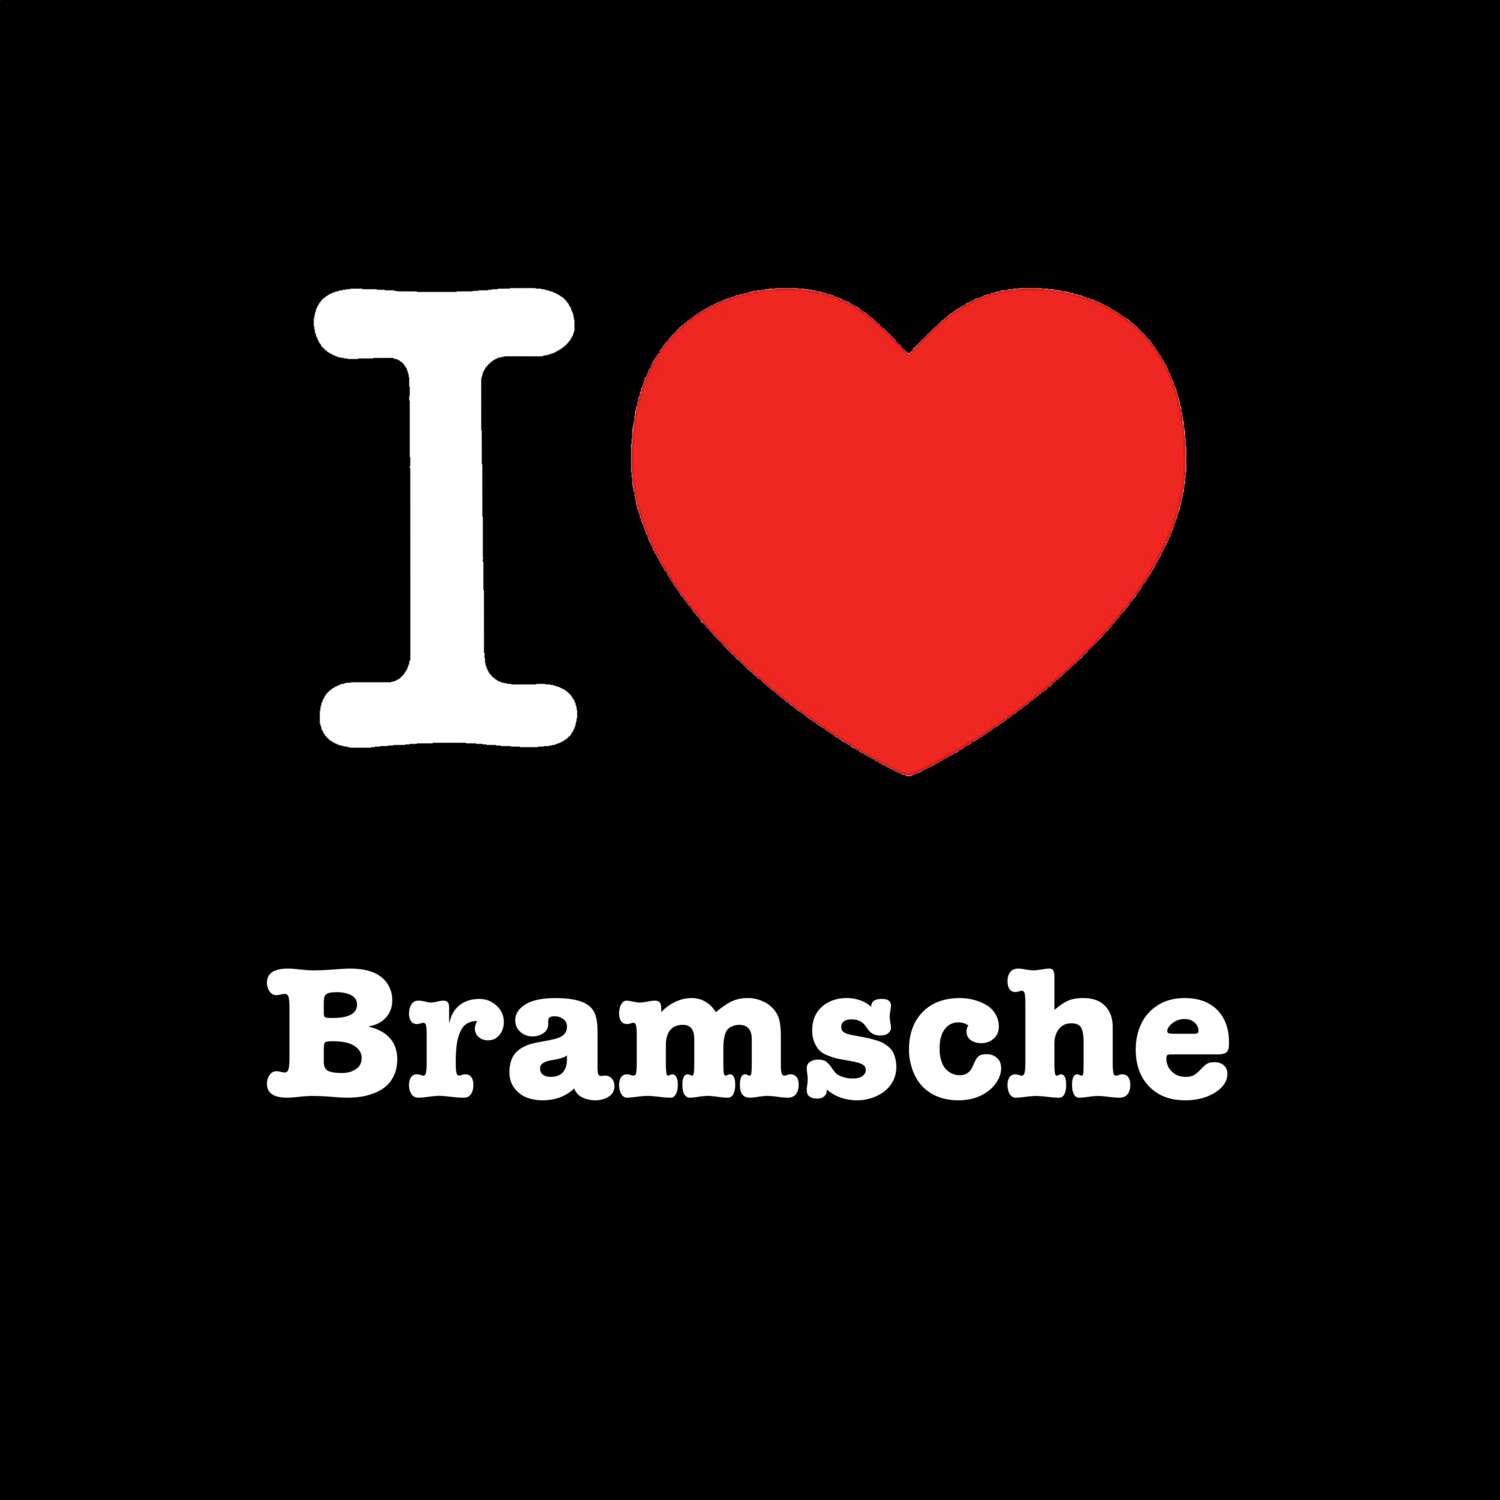 Bramsche T-Shirt »I love«